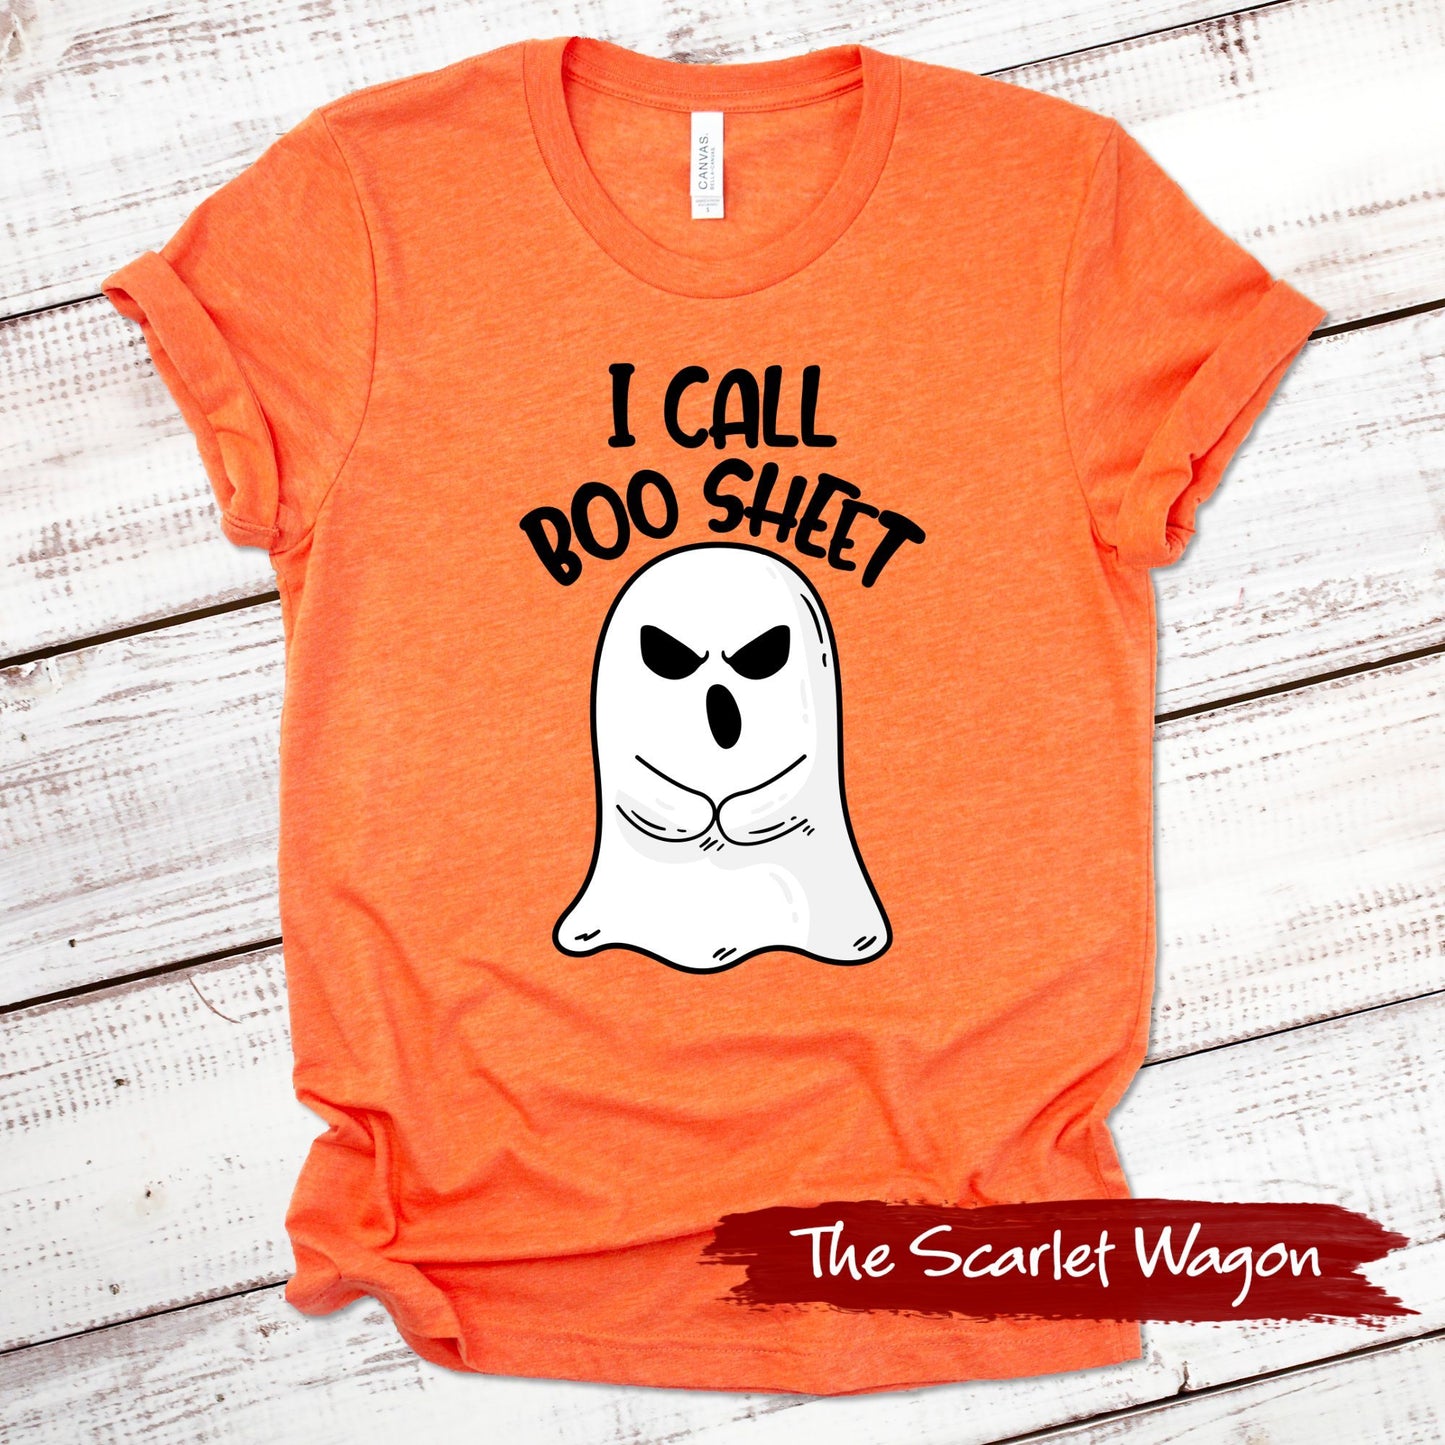 I Call Boo Sheet Halloween Shirt Scarlet Wagon Heather Orange XS 